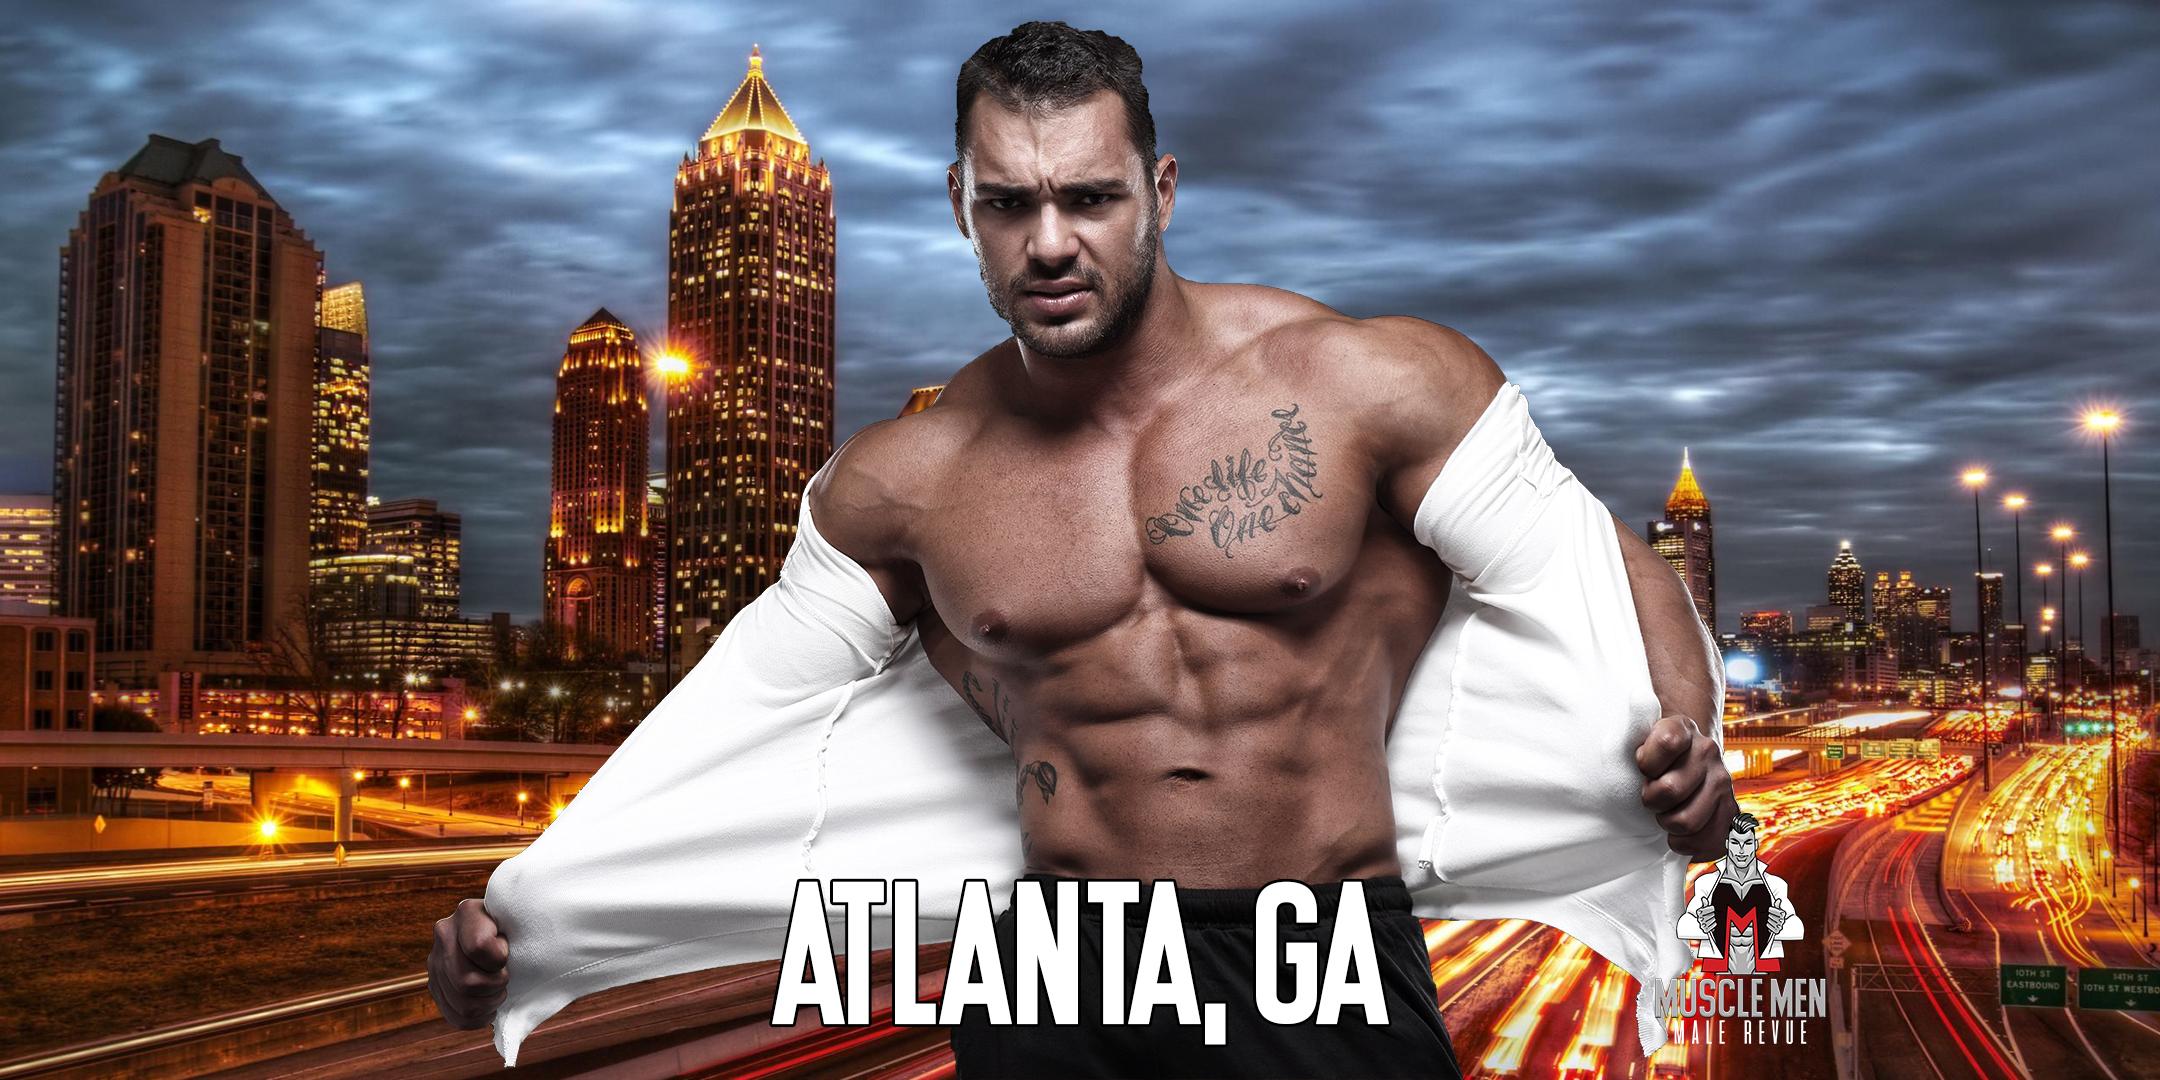 Muscle Men Male Strippers Revue & Male Strip Club Shows Atlanta GA - 8PM to 10PM